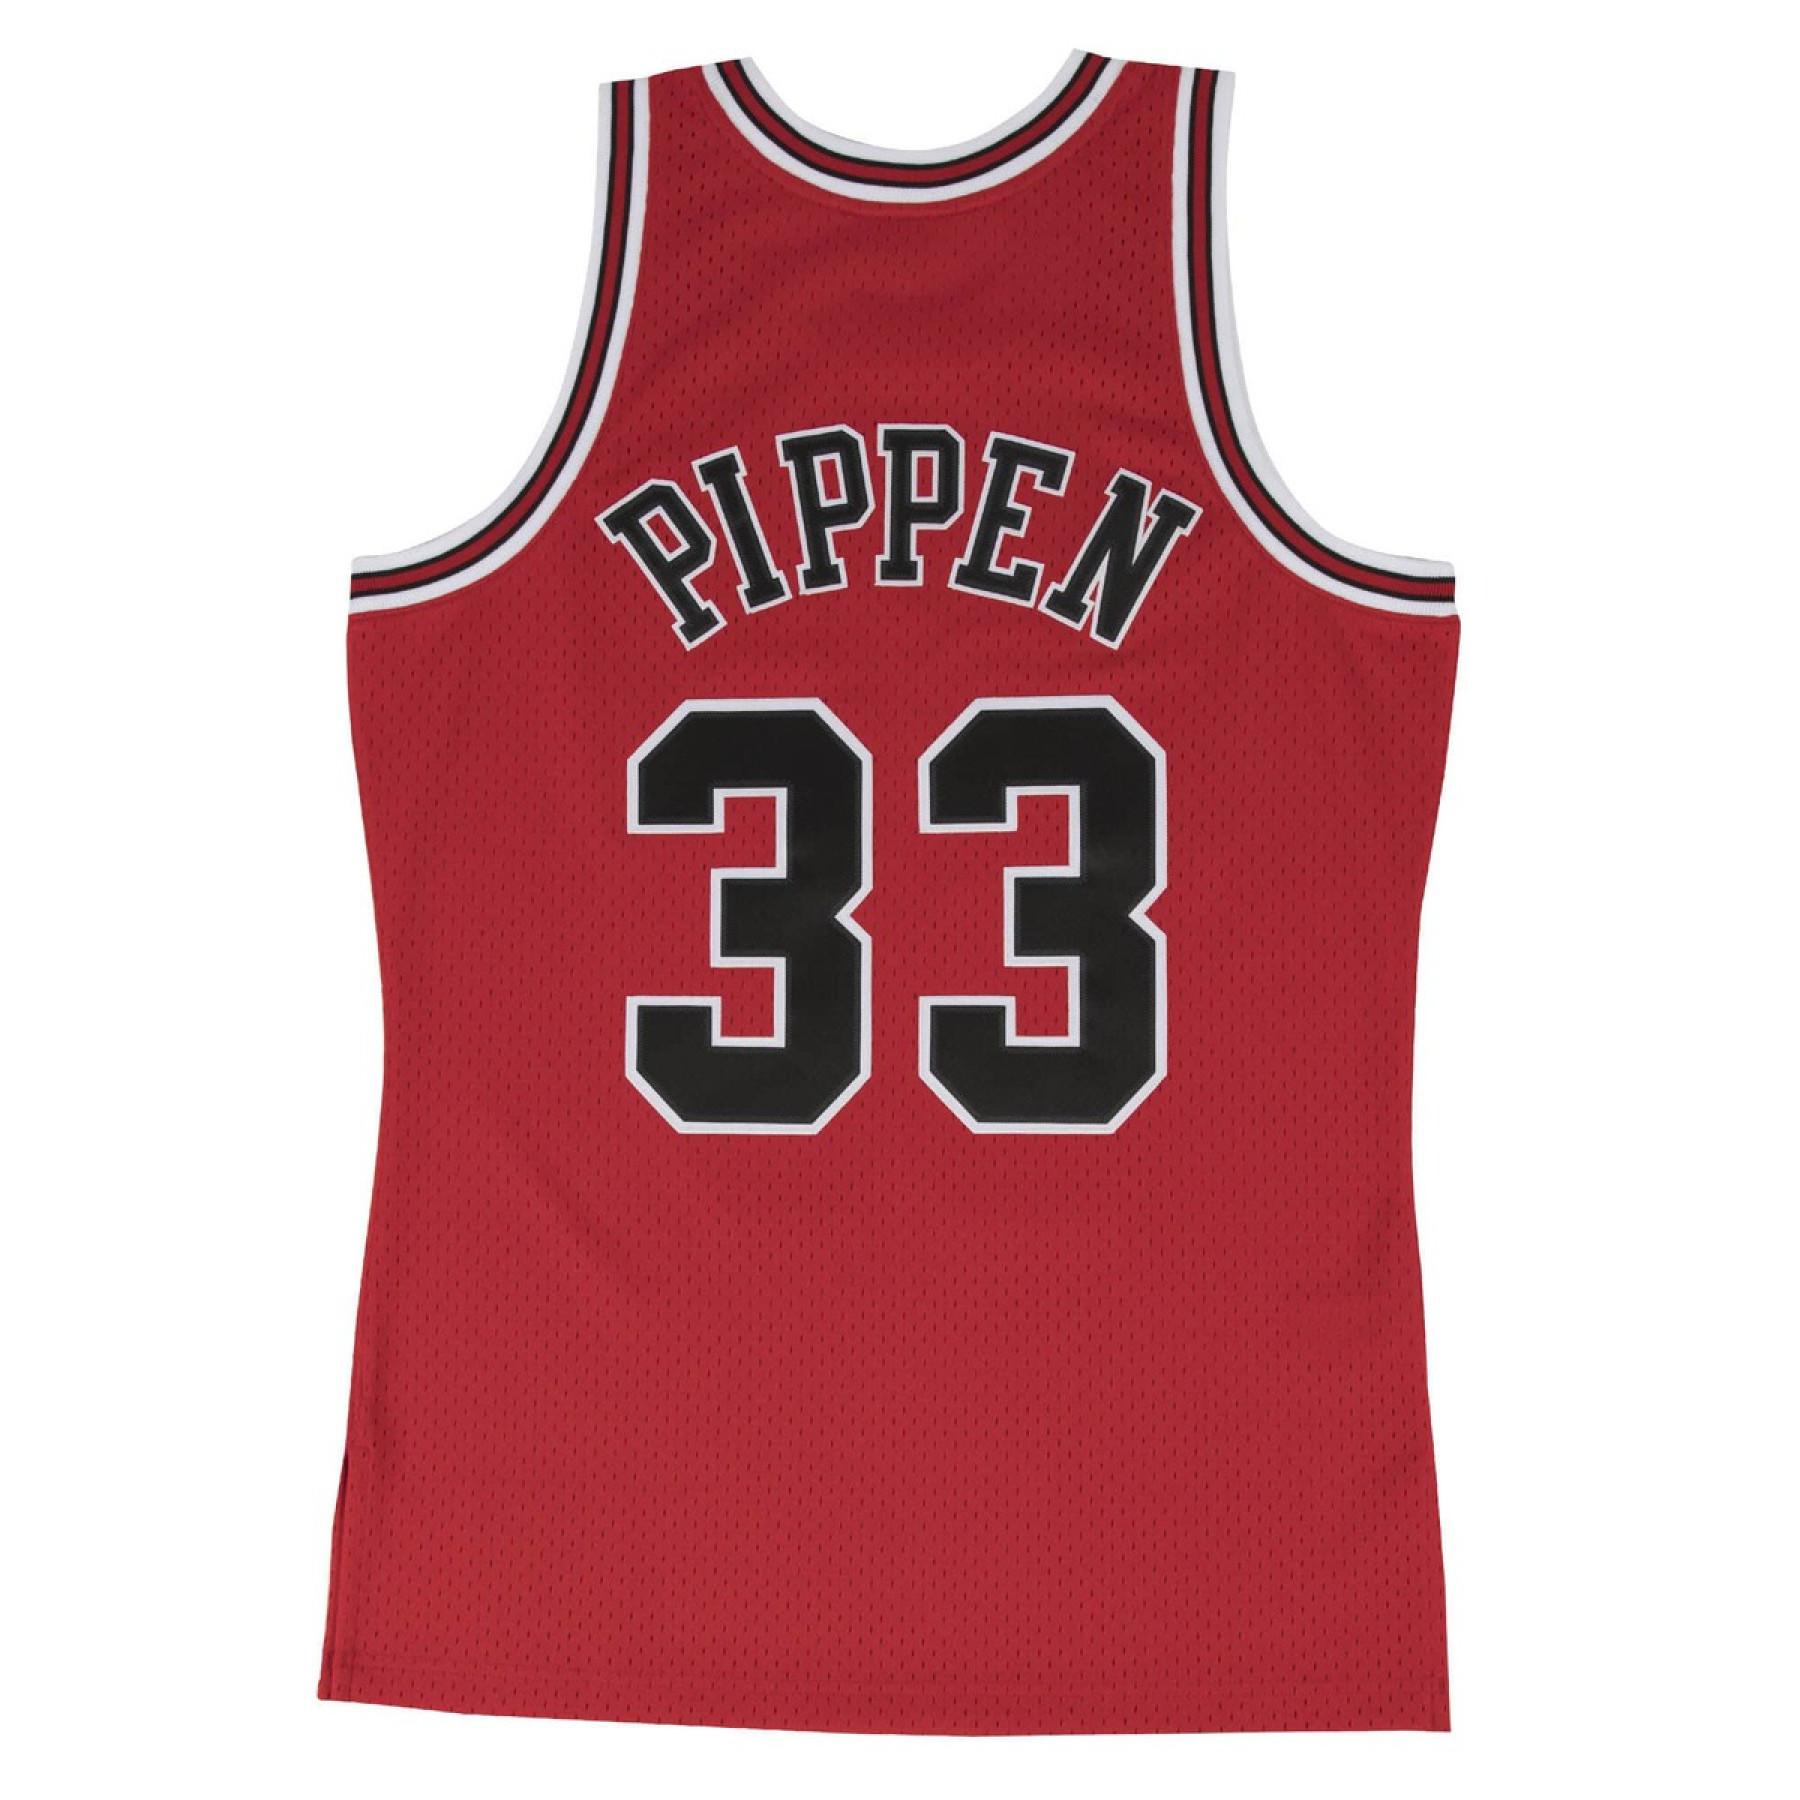 Jersey Chicago Bulls 1997-98 Scottie Pippen